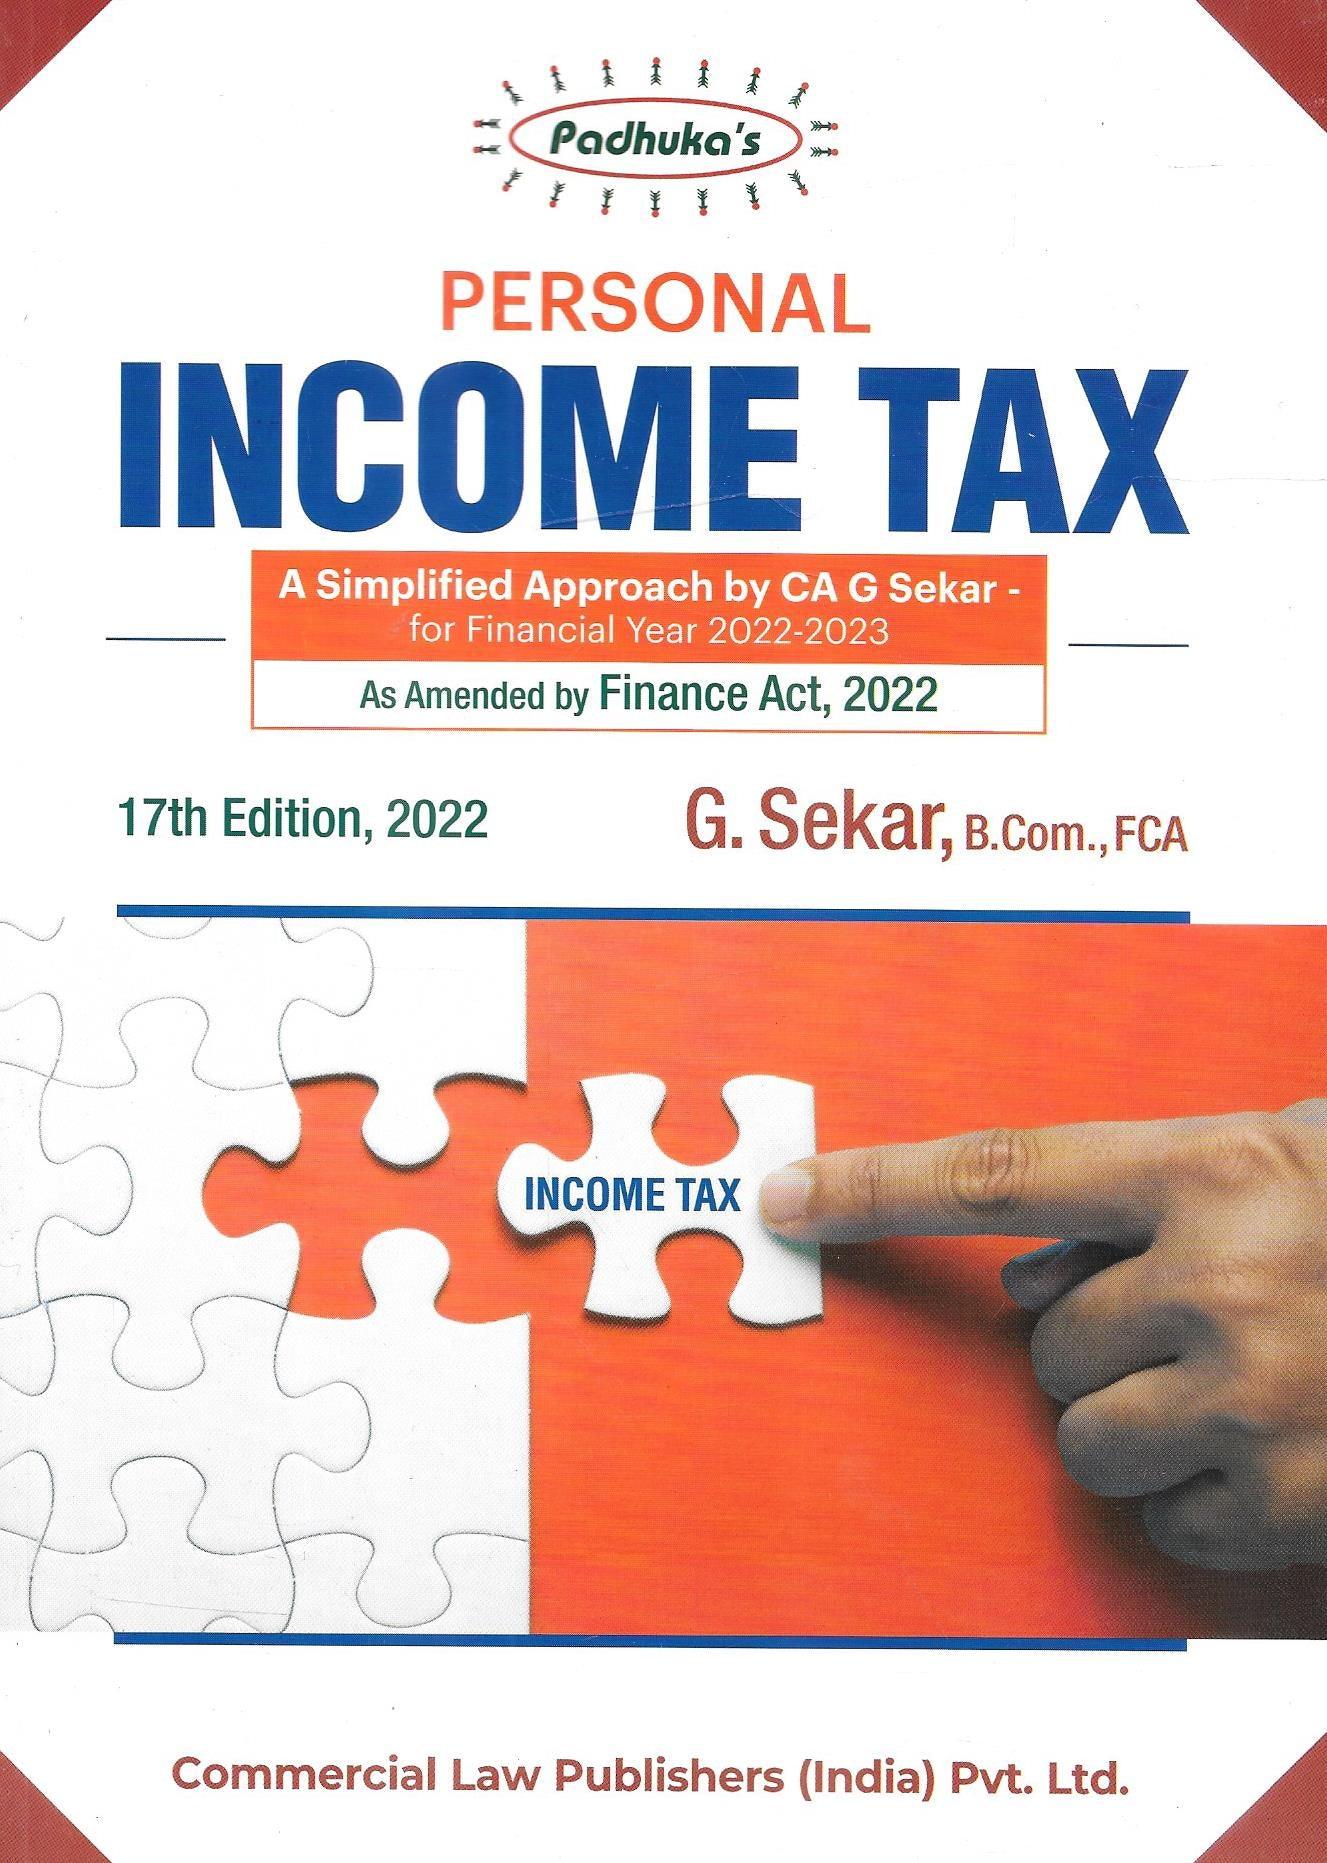 Pesonal Income Tax - M&J Services